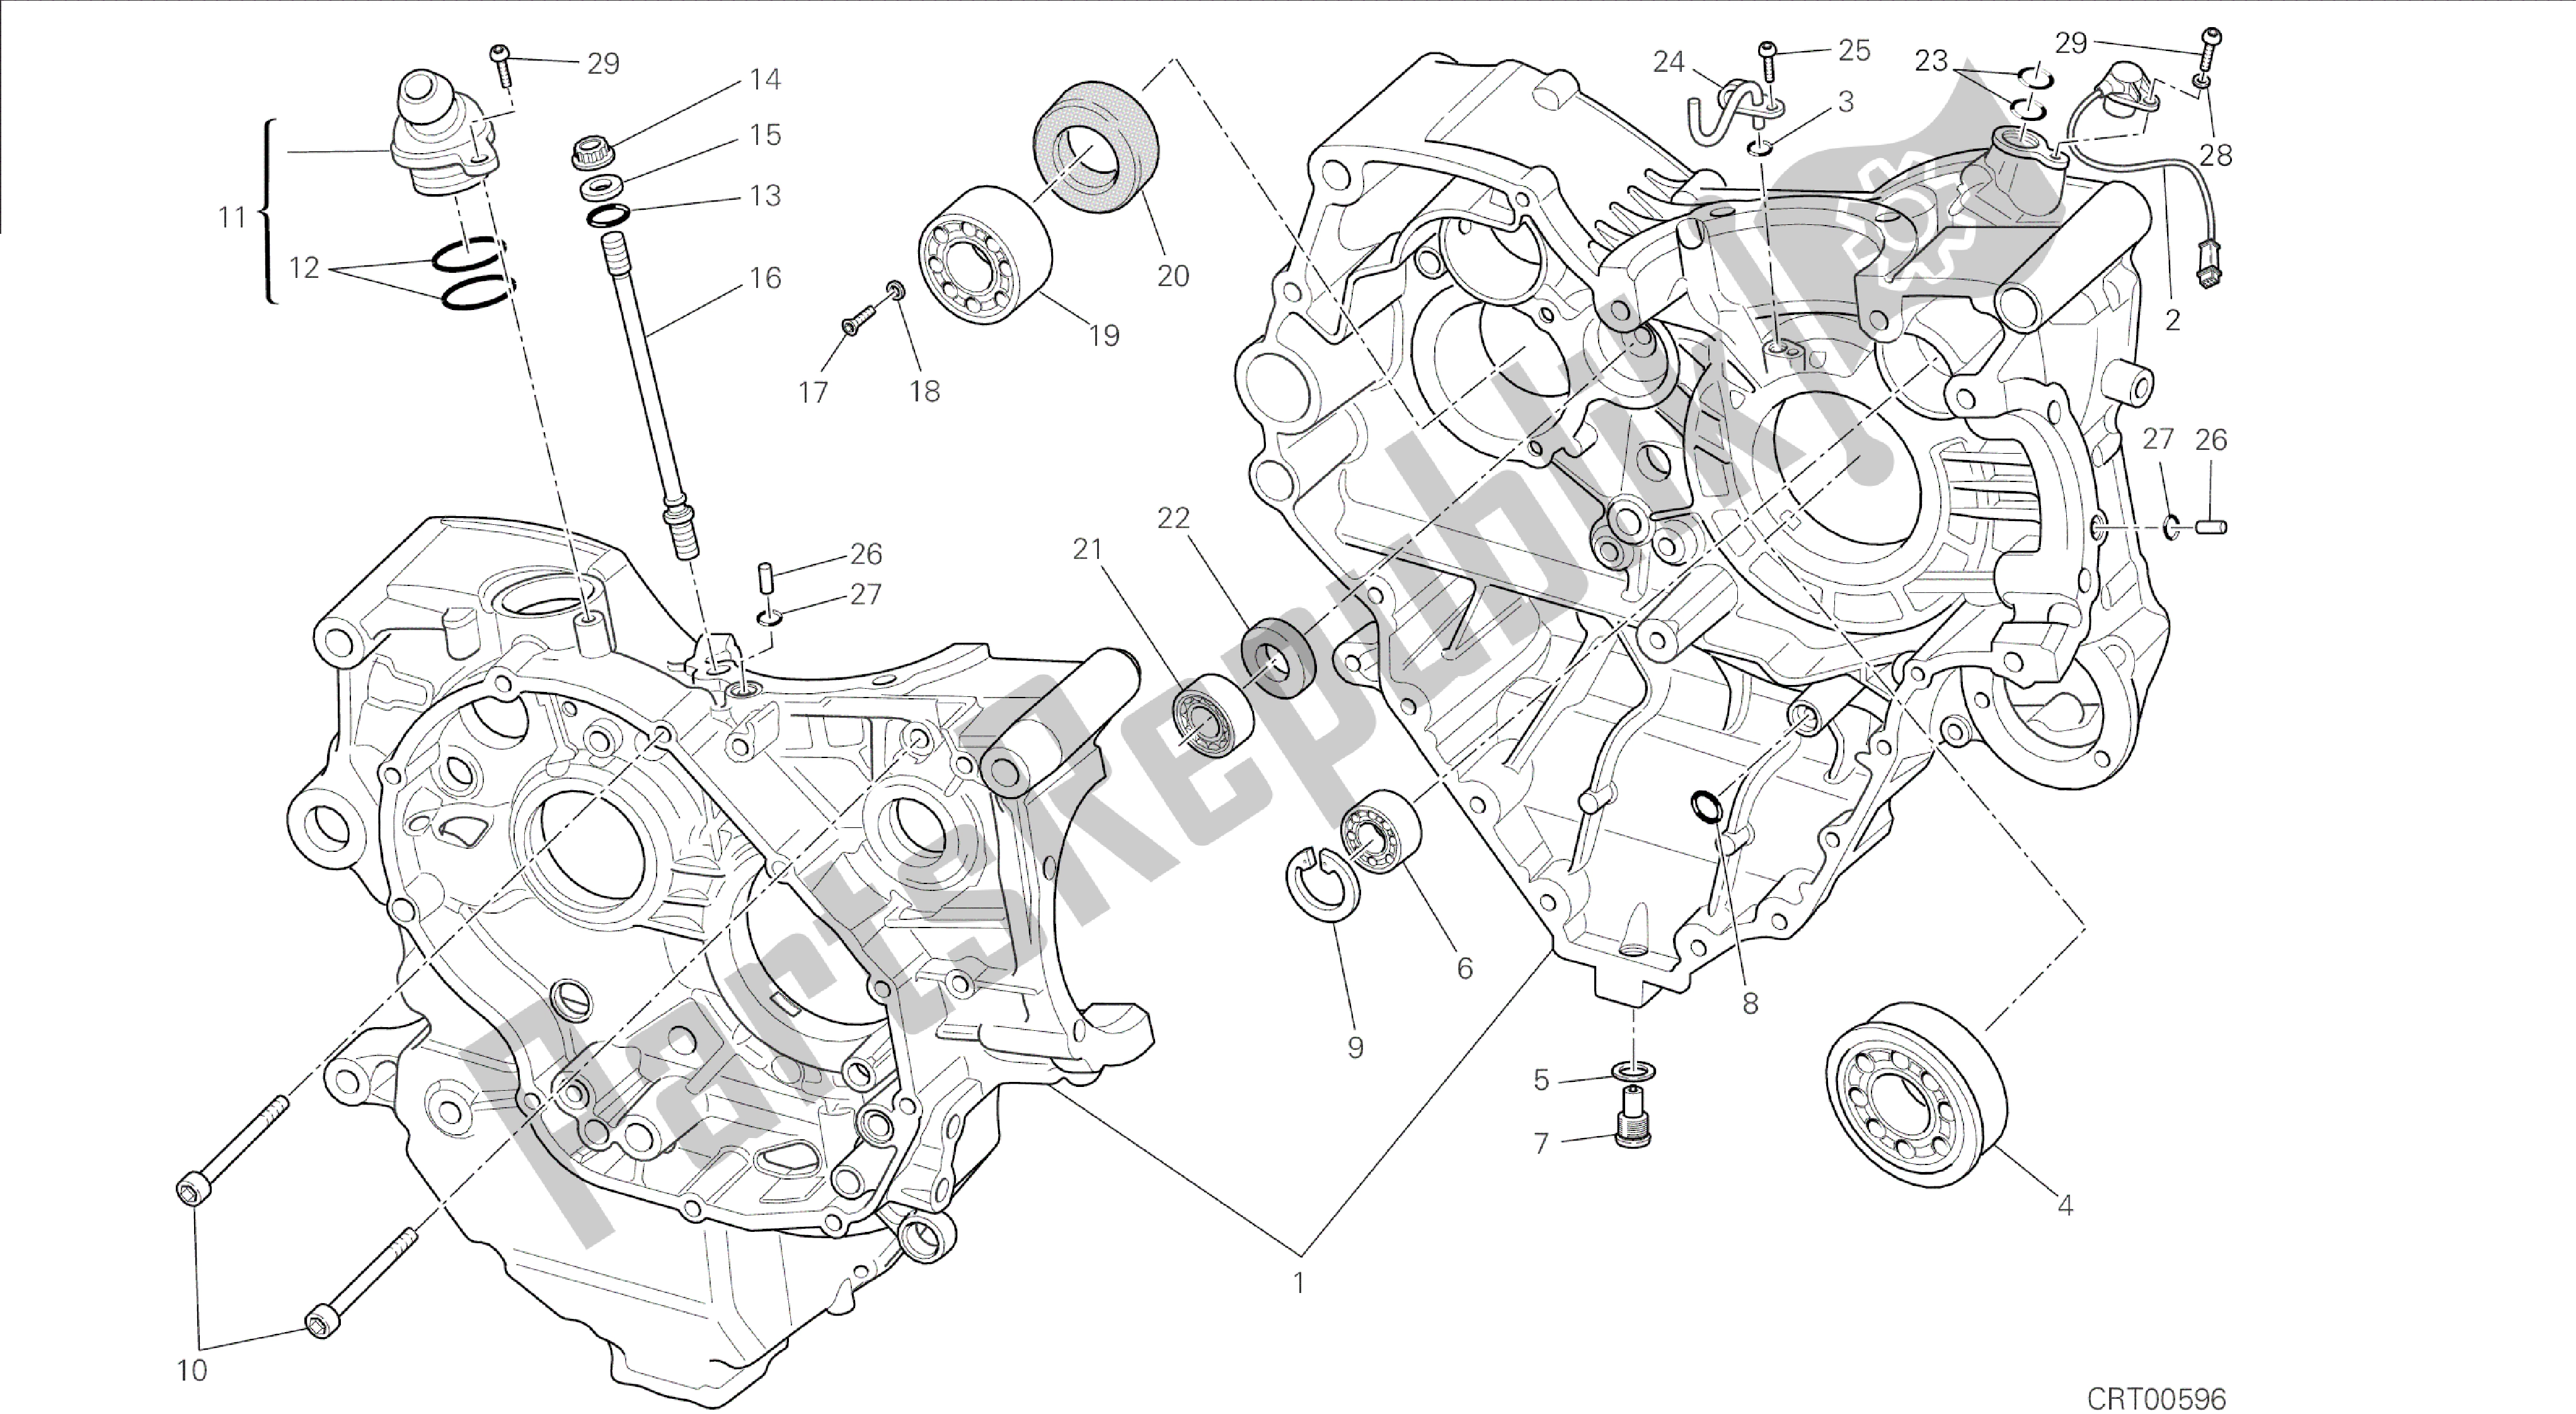 Todas las partes para Dibujo 010 - Cárter [mod: F848; Xst: Motor De Grupo Aus, Bra, Chn, Eur, Fra, Jap, Tha] de Ducati Streetfighter 848 2014